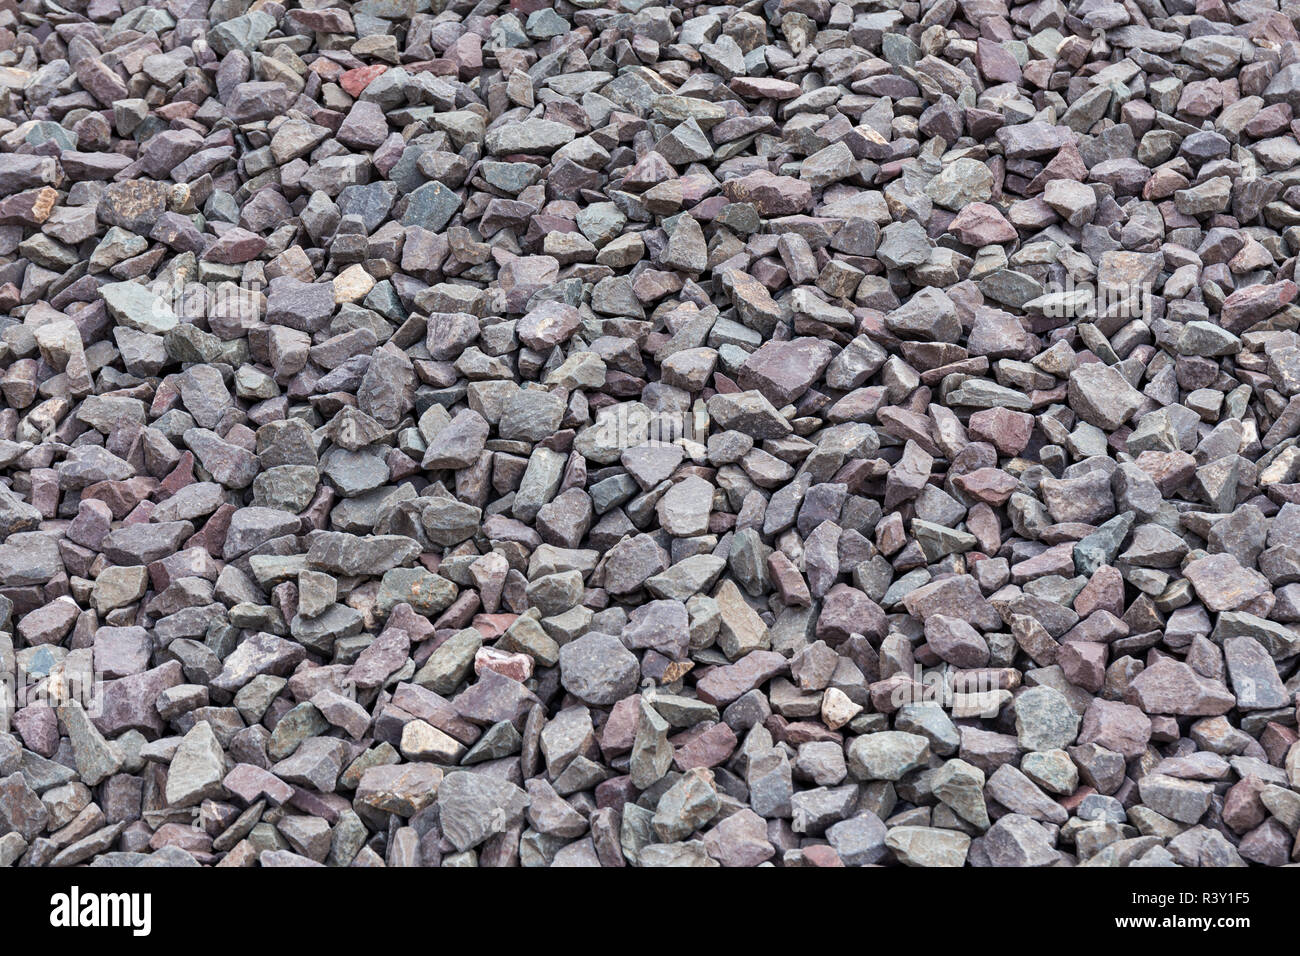 Gravel Stones background or texture Stock Photo